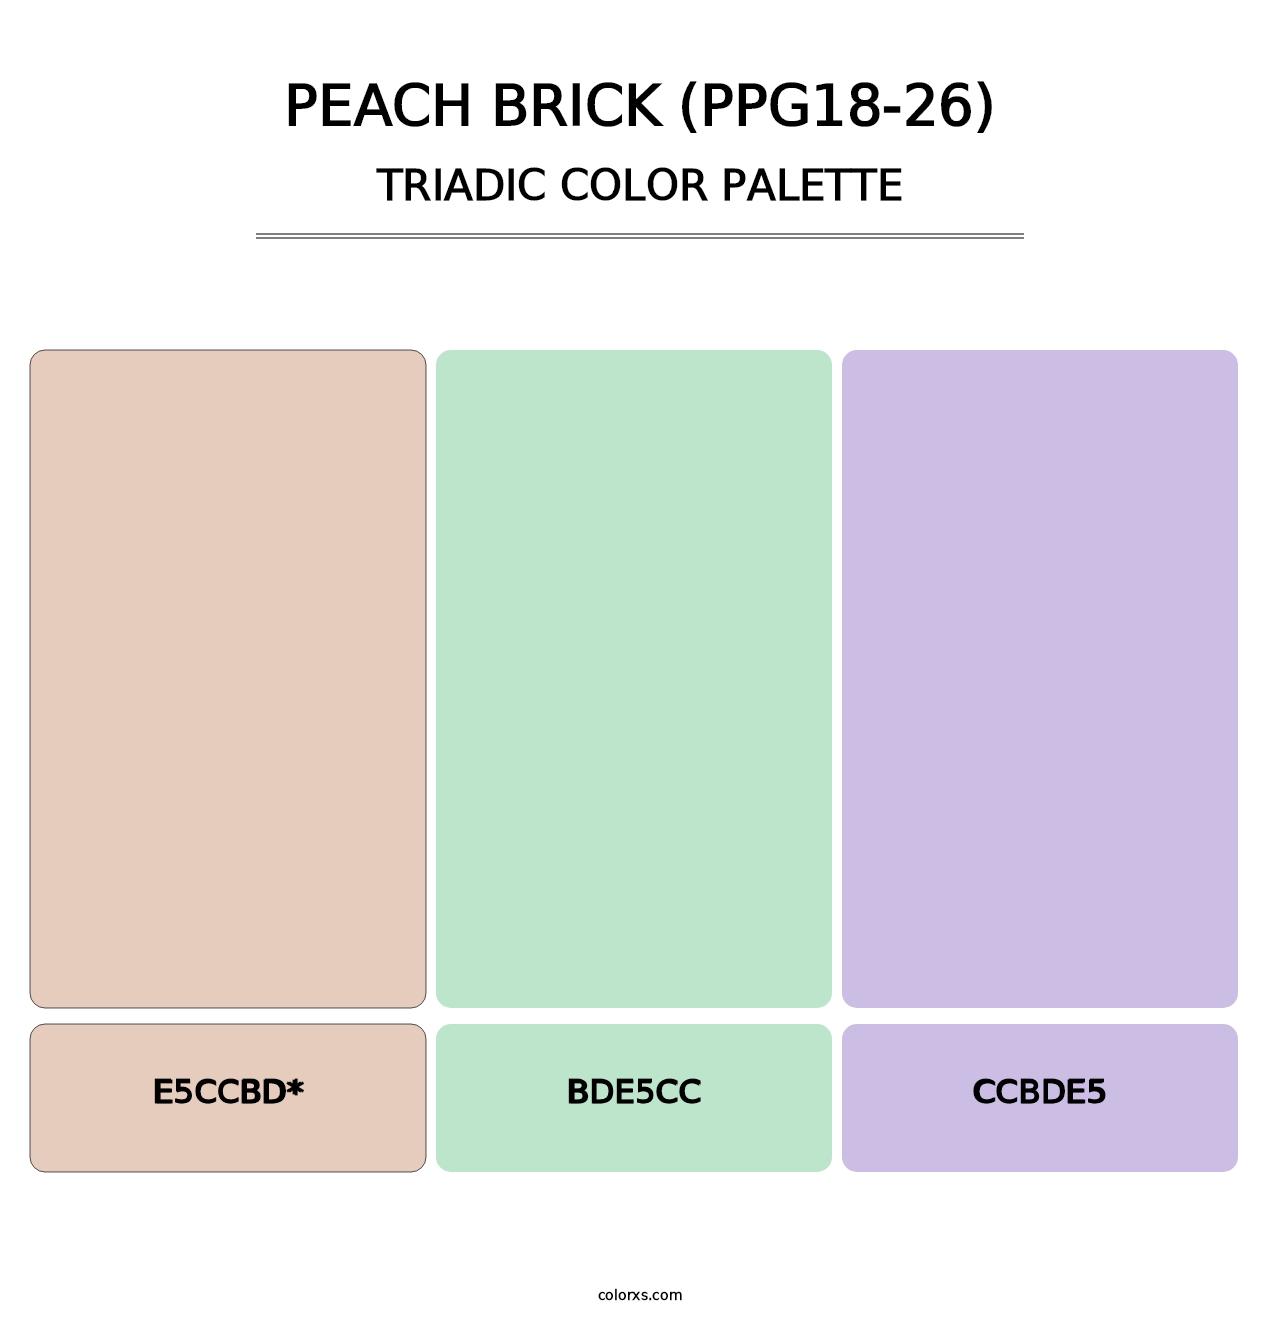 Peach Brick (PPG18-26) - Triadic Color Palette